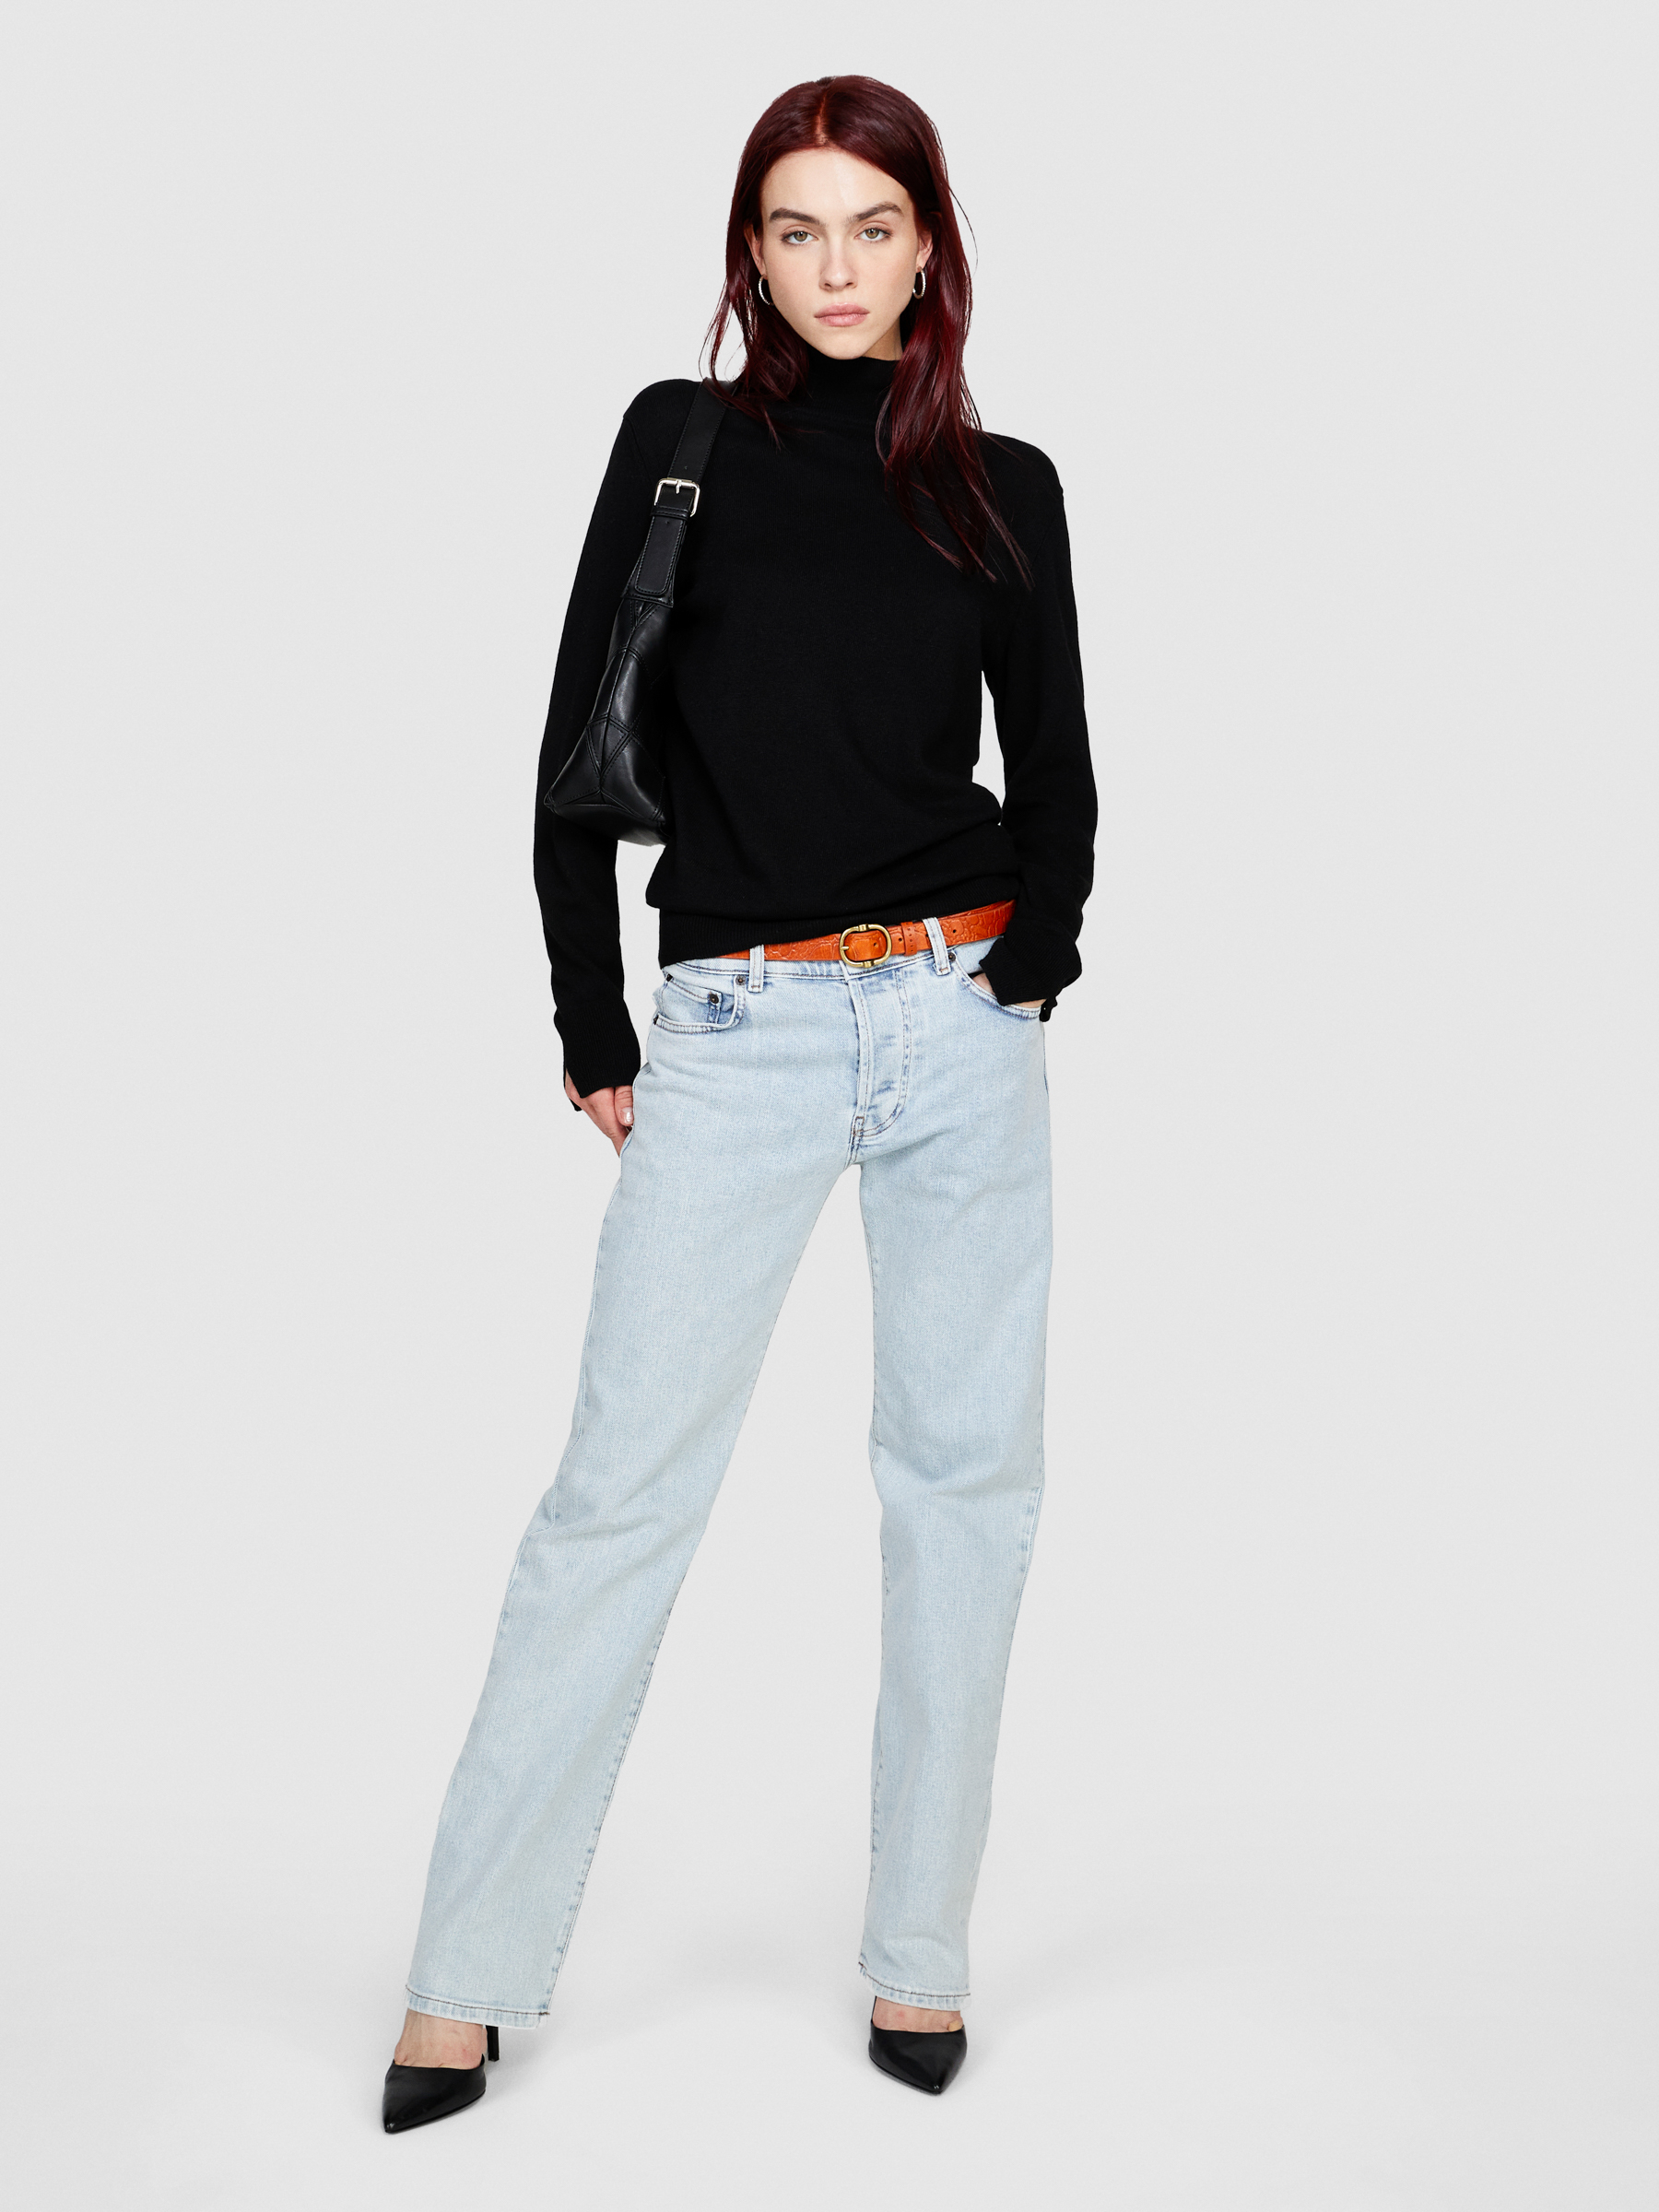 Sisley - High Neck Sweater, Woman, Black, Size: M